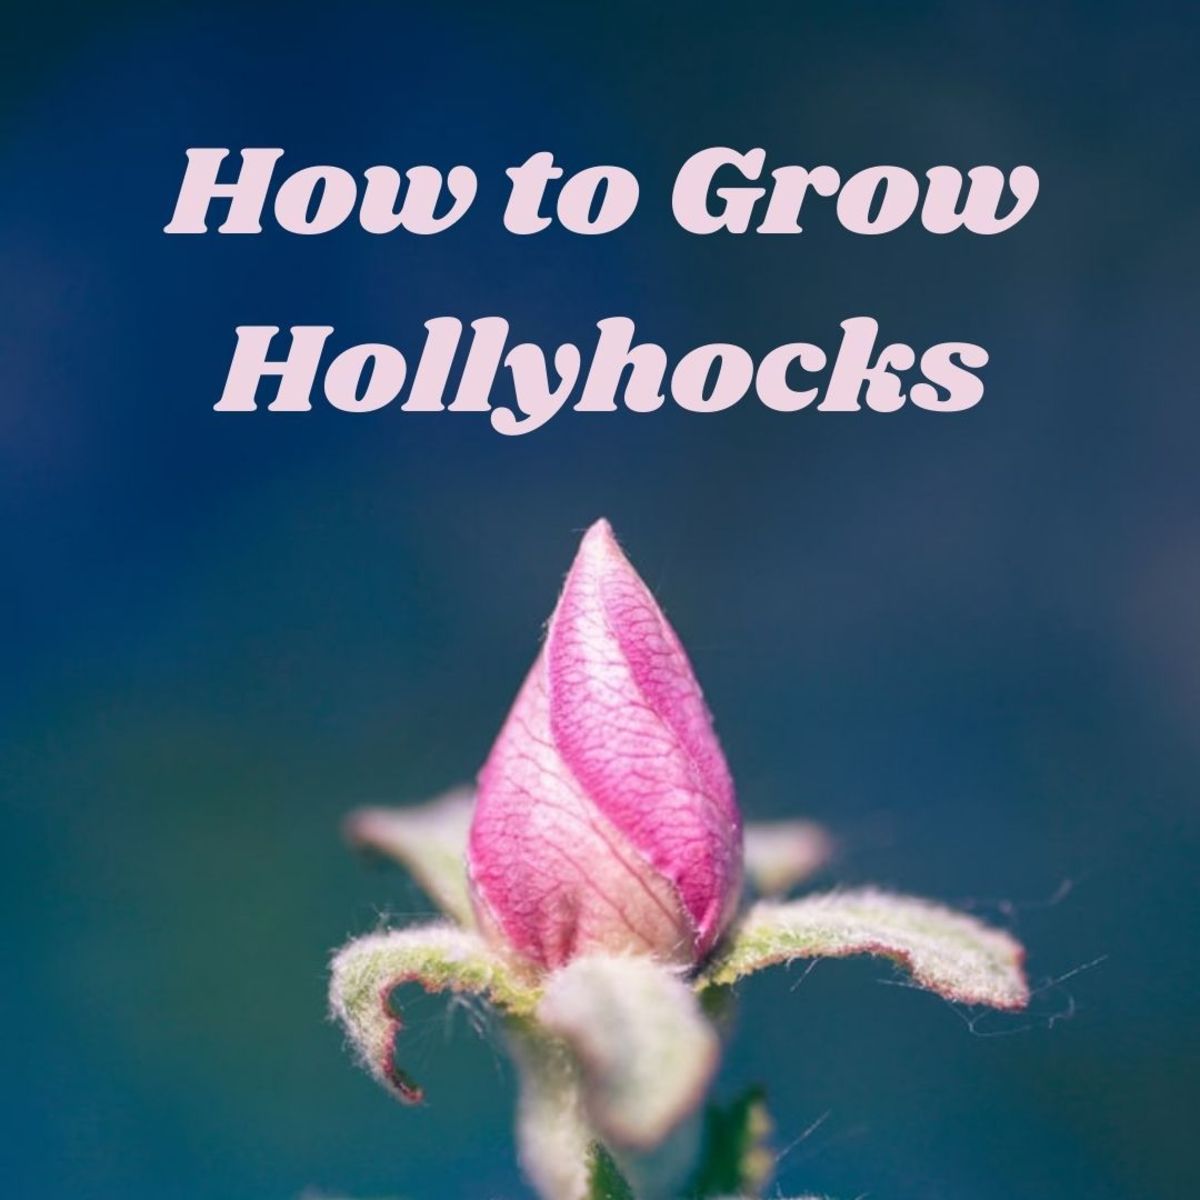 How to grow hollyhocks.